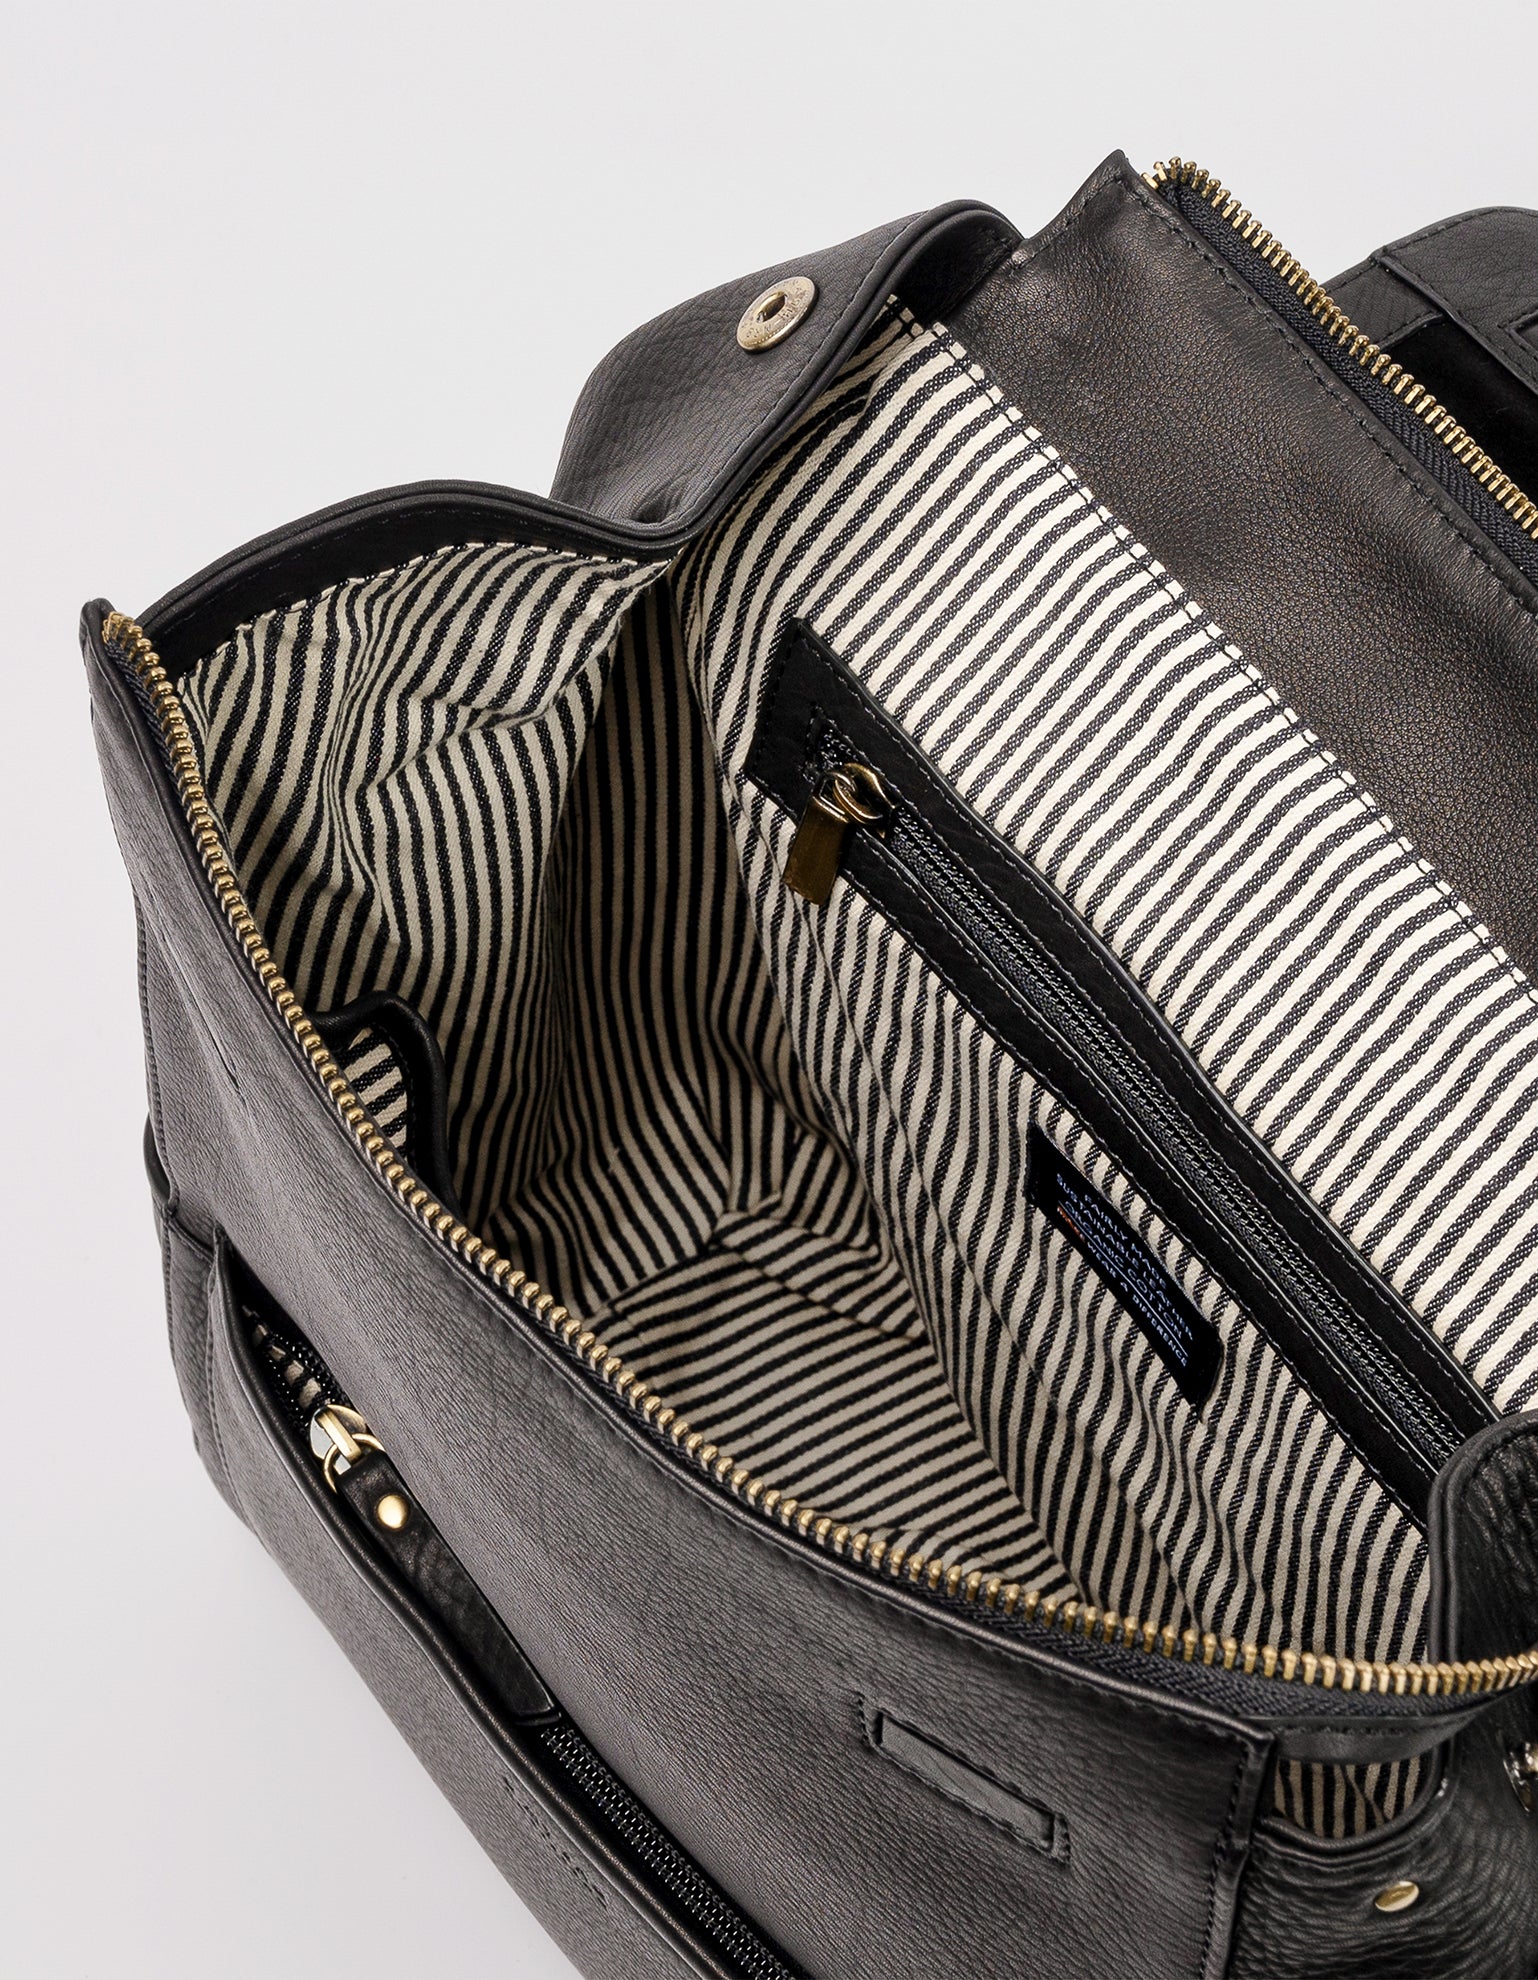 Black Leather backpack. Inside product image.